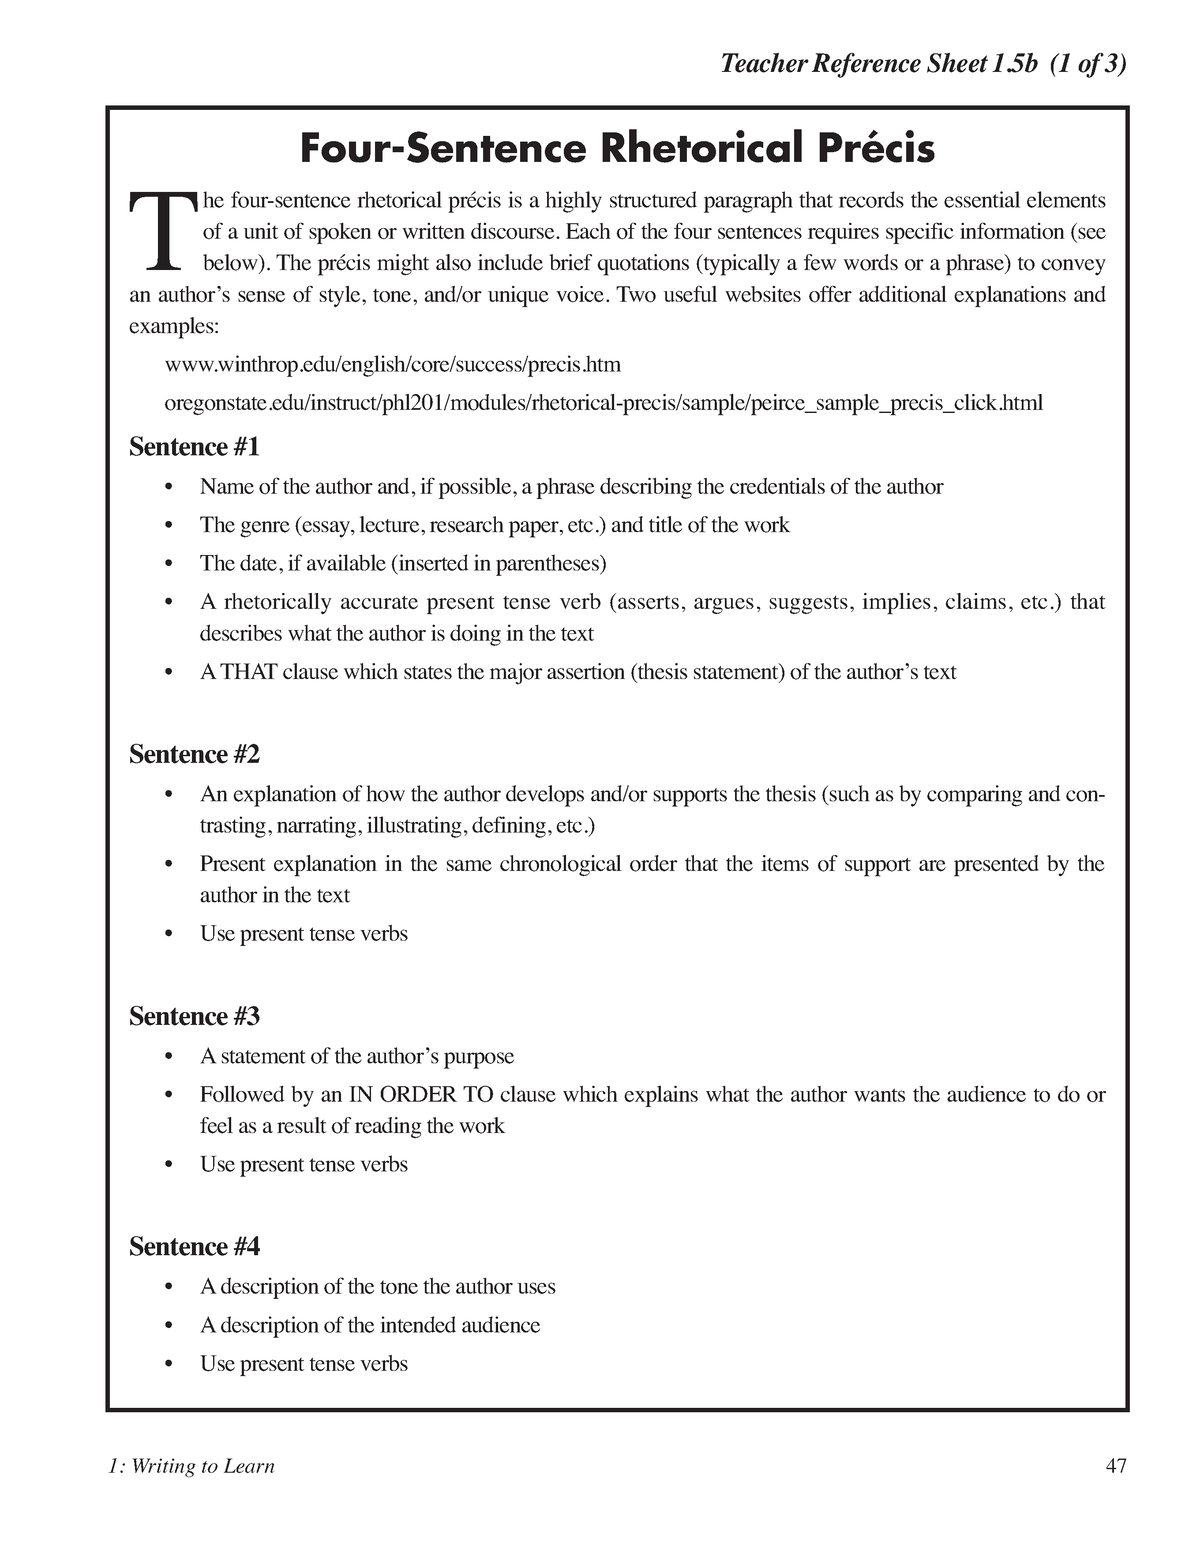 Teacher Reference Sheet 1 5b Rhetorical Précis Studocu